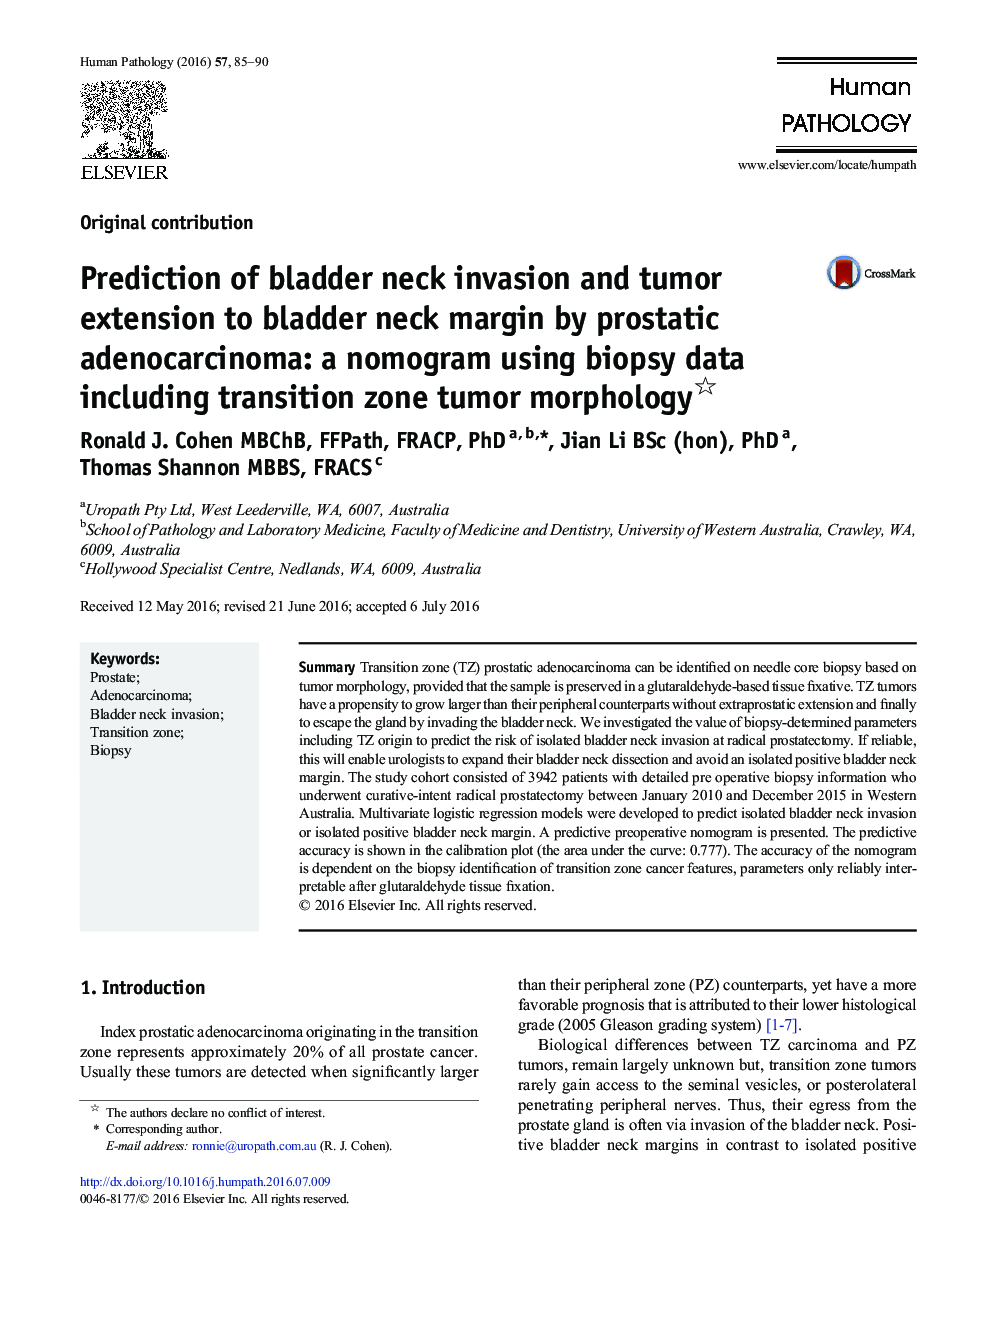 Prediction of bladder neck invasion and tumor extension to bladder neck margin by prostatic adenocarcinoma: a nomogram using biopsy data including transition zone tumor morphology